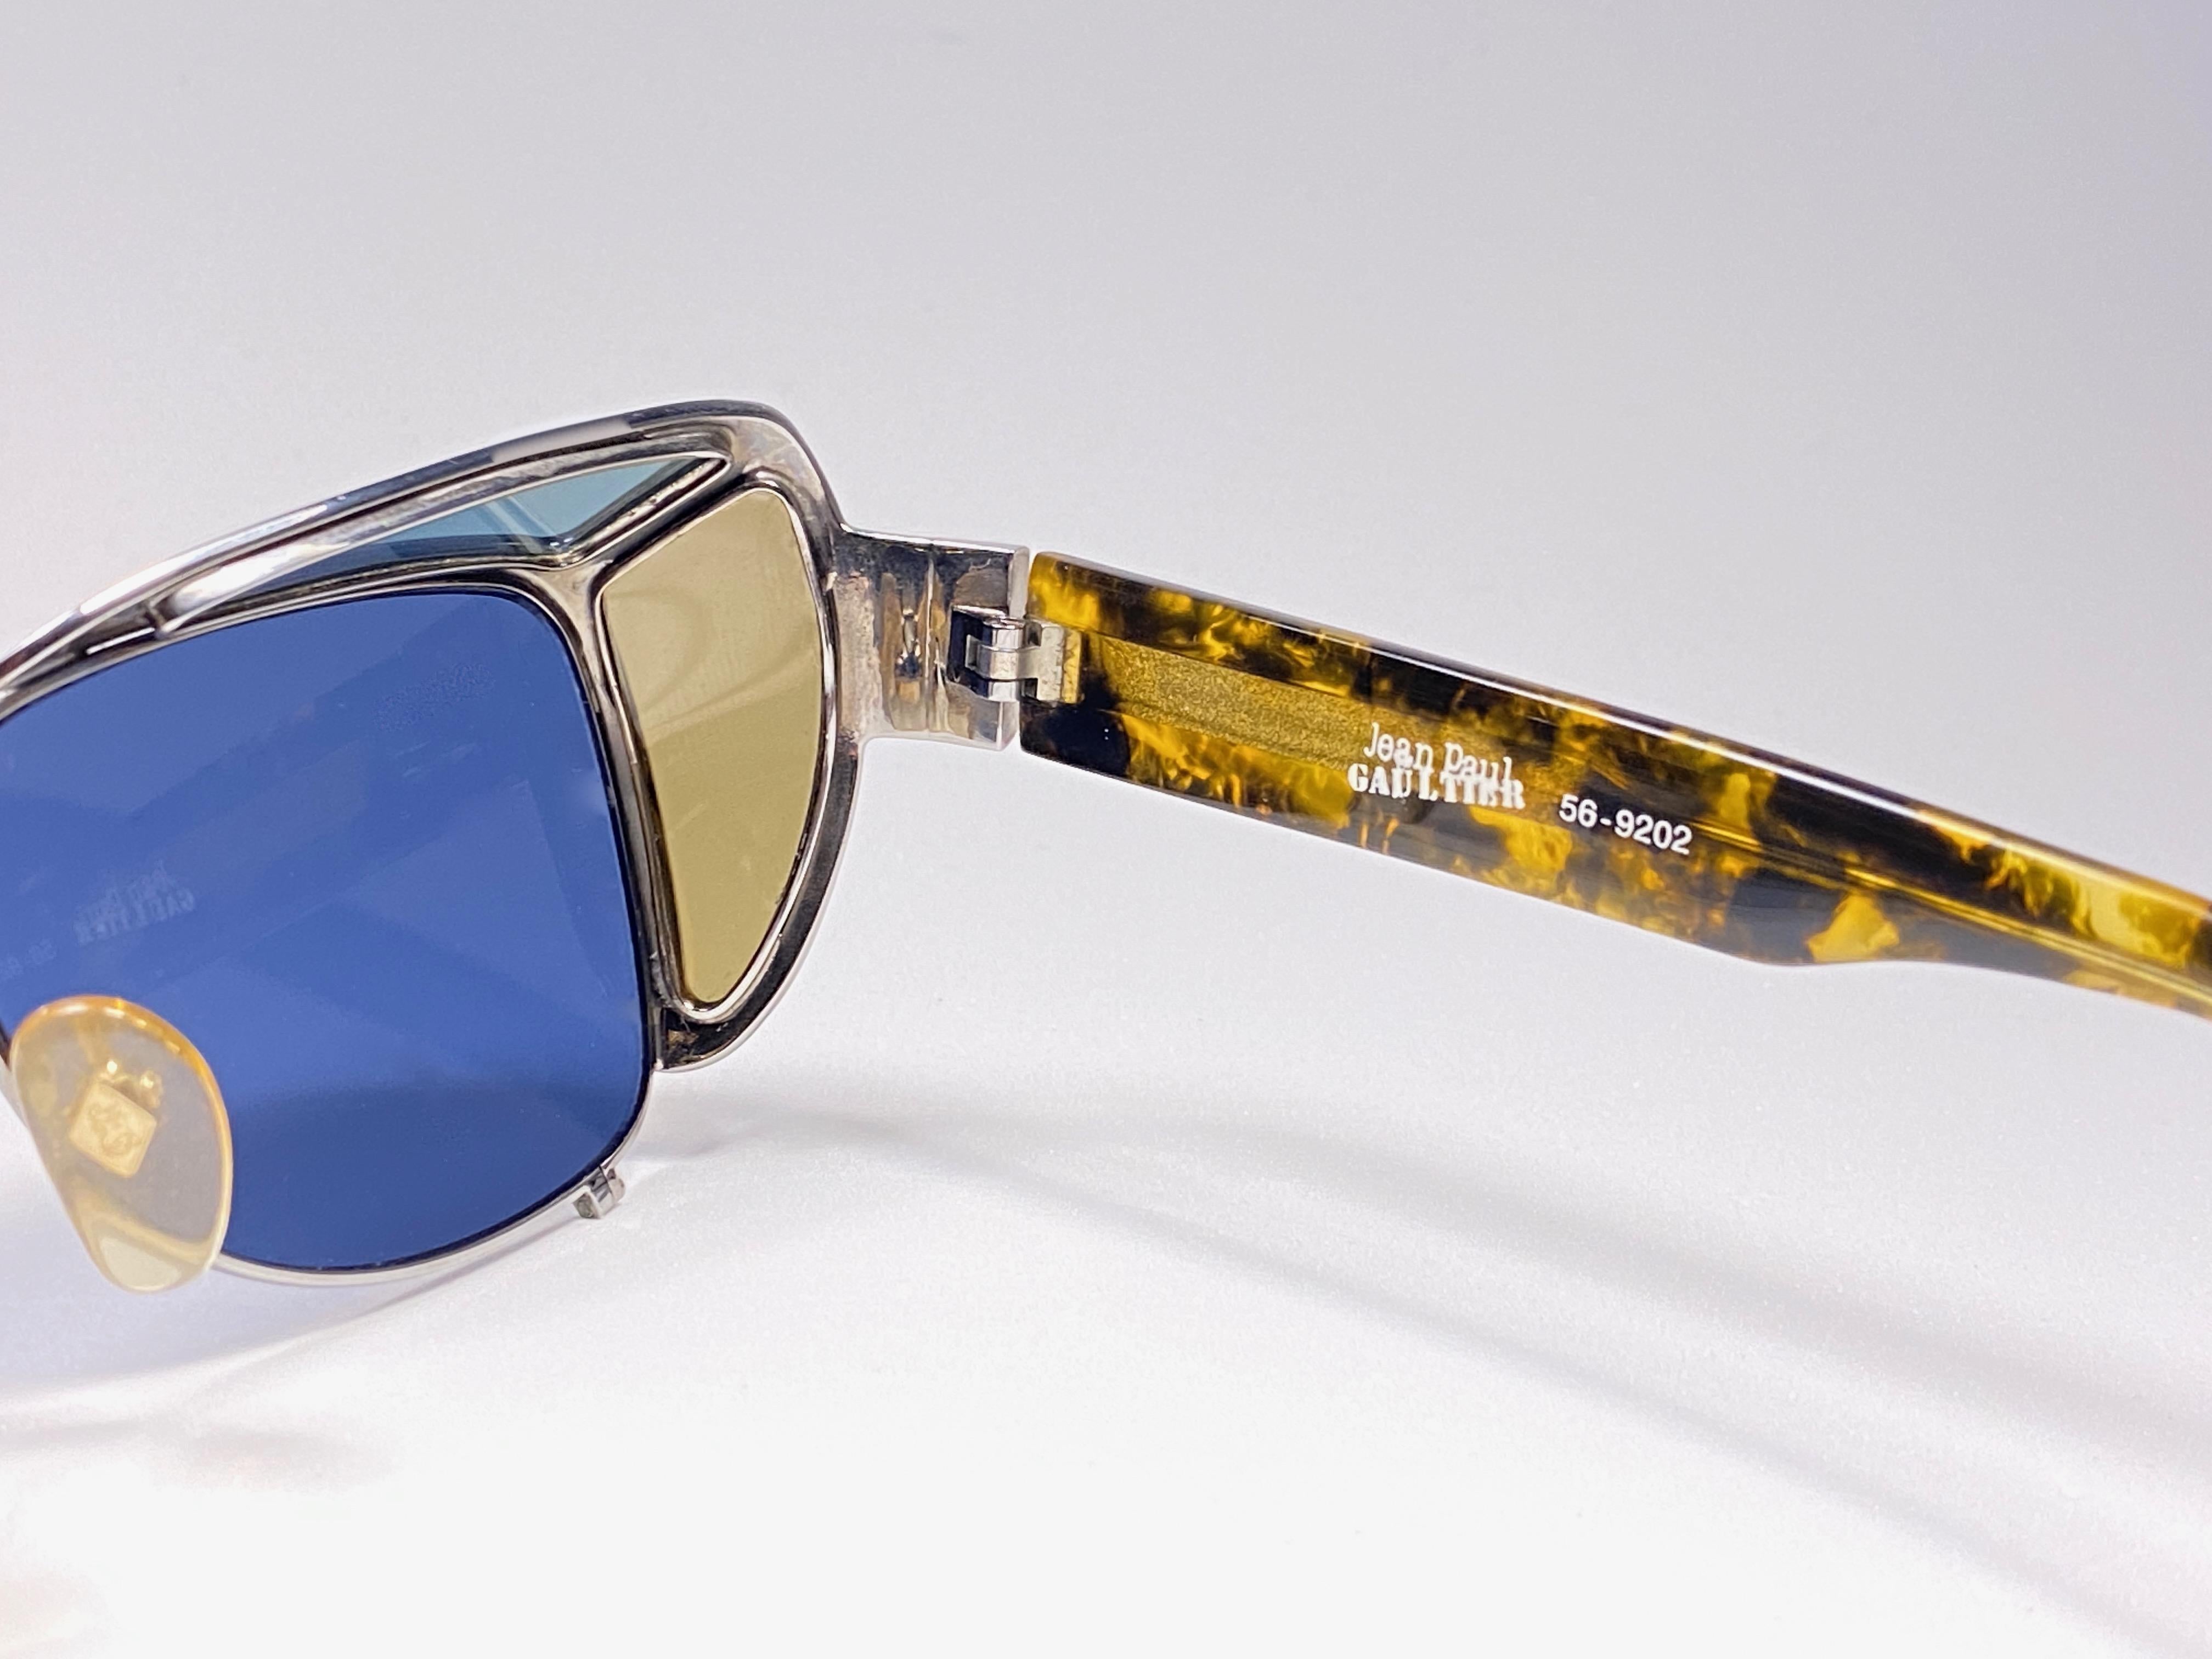 Jean Paul Gaultier 56 9272 Shield Frame Collectors Item 1990's Japan Sunglasses For Sale 1